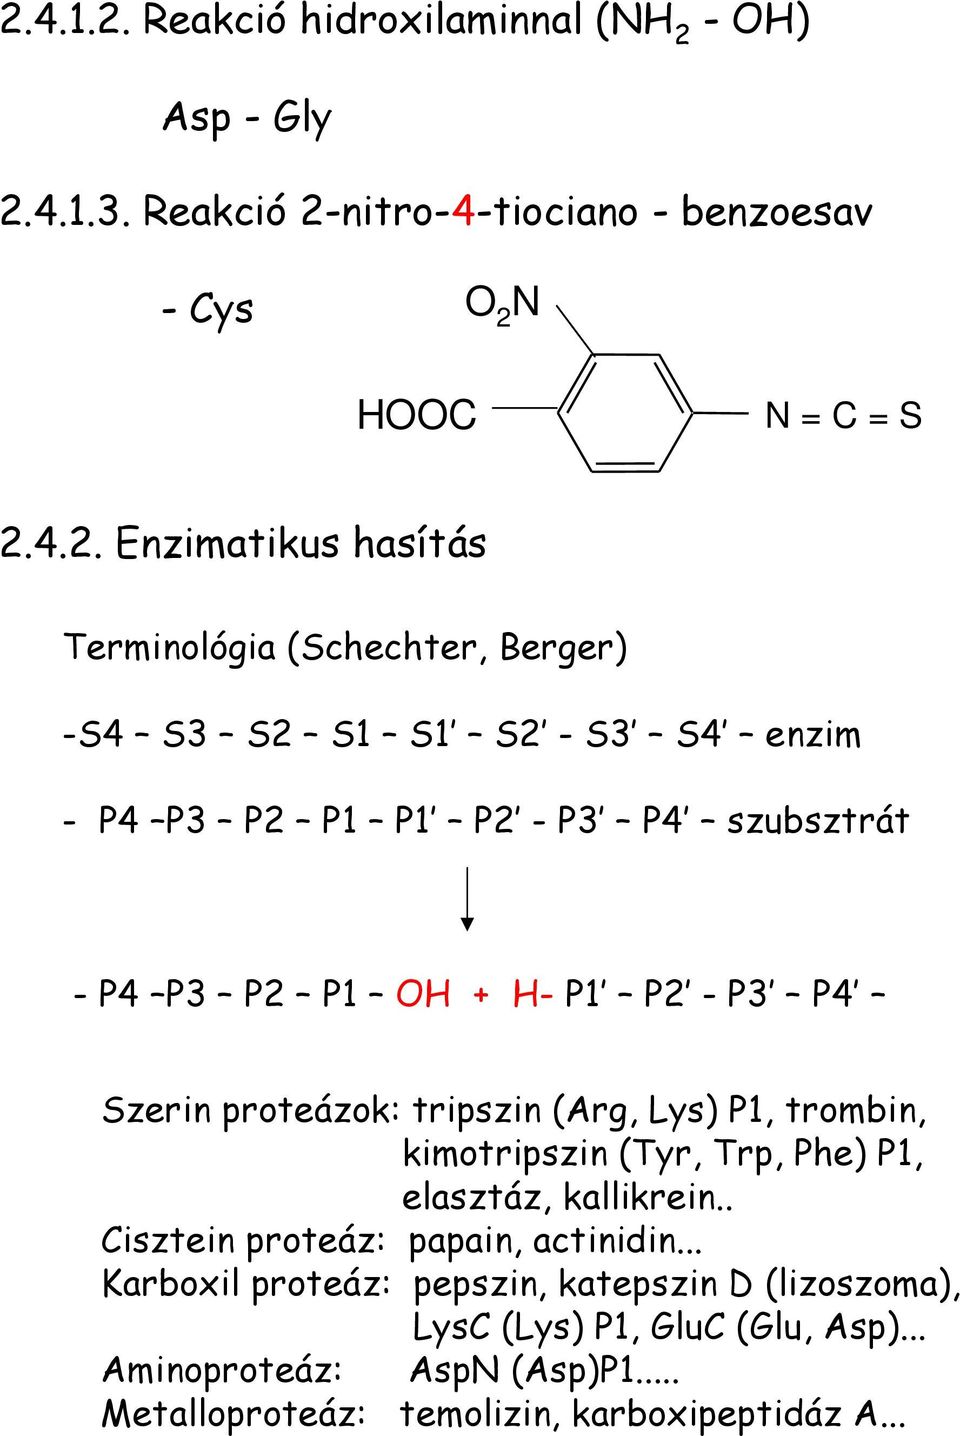 Szerin proteázok: tripszin (Arg, Lys) P1, trombin, kimotripszin (Tyr, Trp, Phe) P1, elasztáz, kallikrein.. Cisztein proteáz: papain, actinidin.